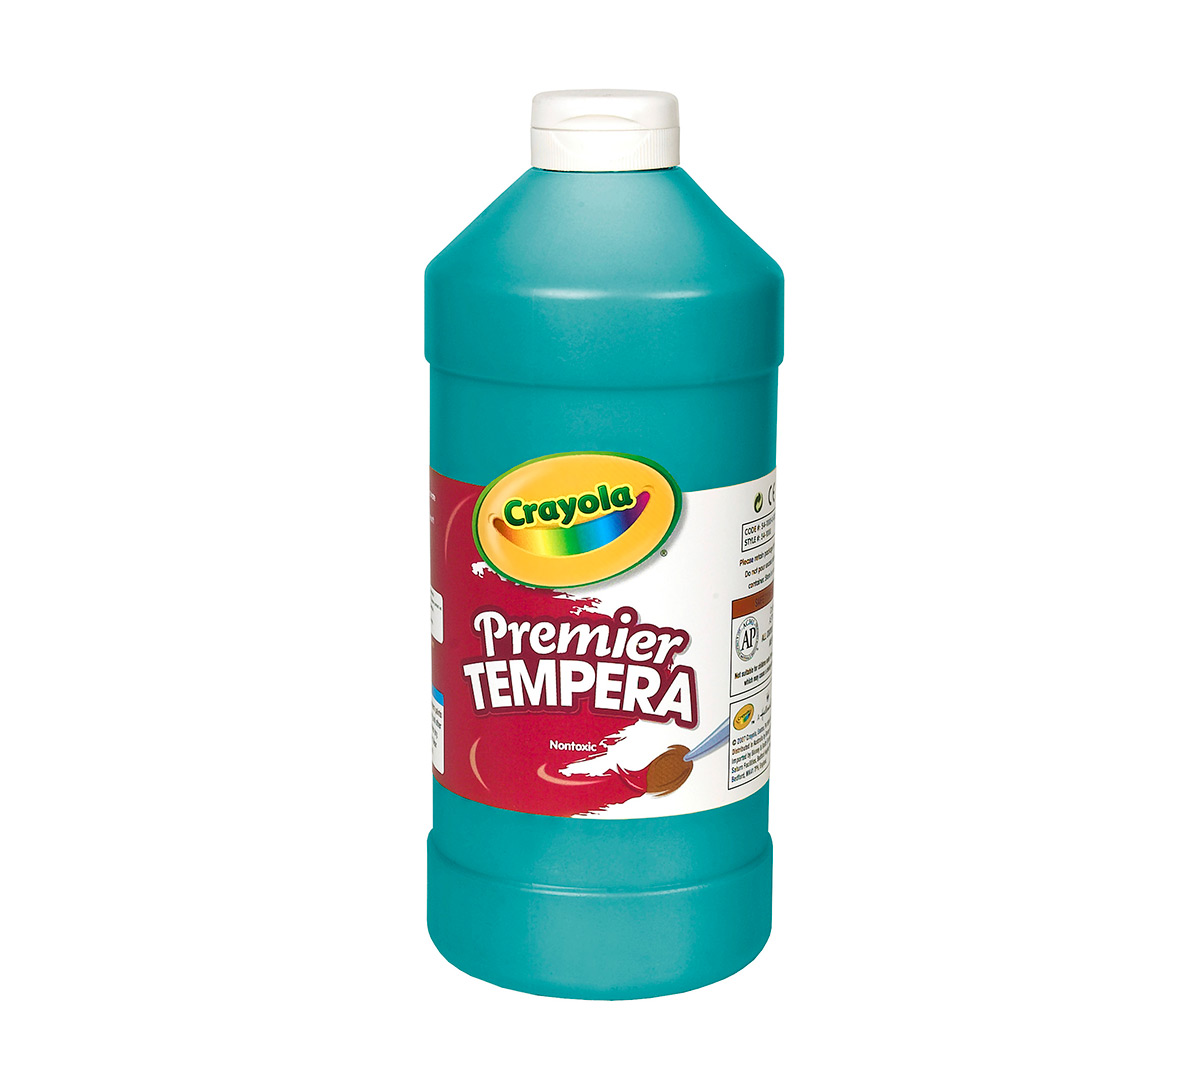 Premier Tempera Paint, 32 oz. Bottle - Turquoise | Crayola